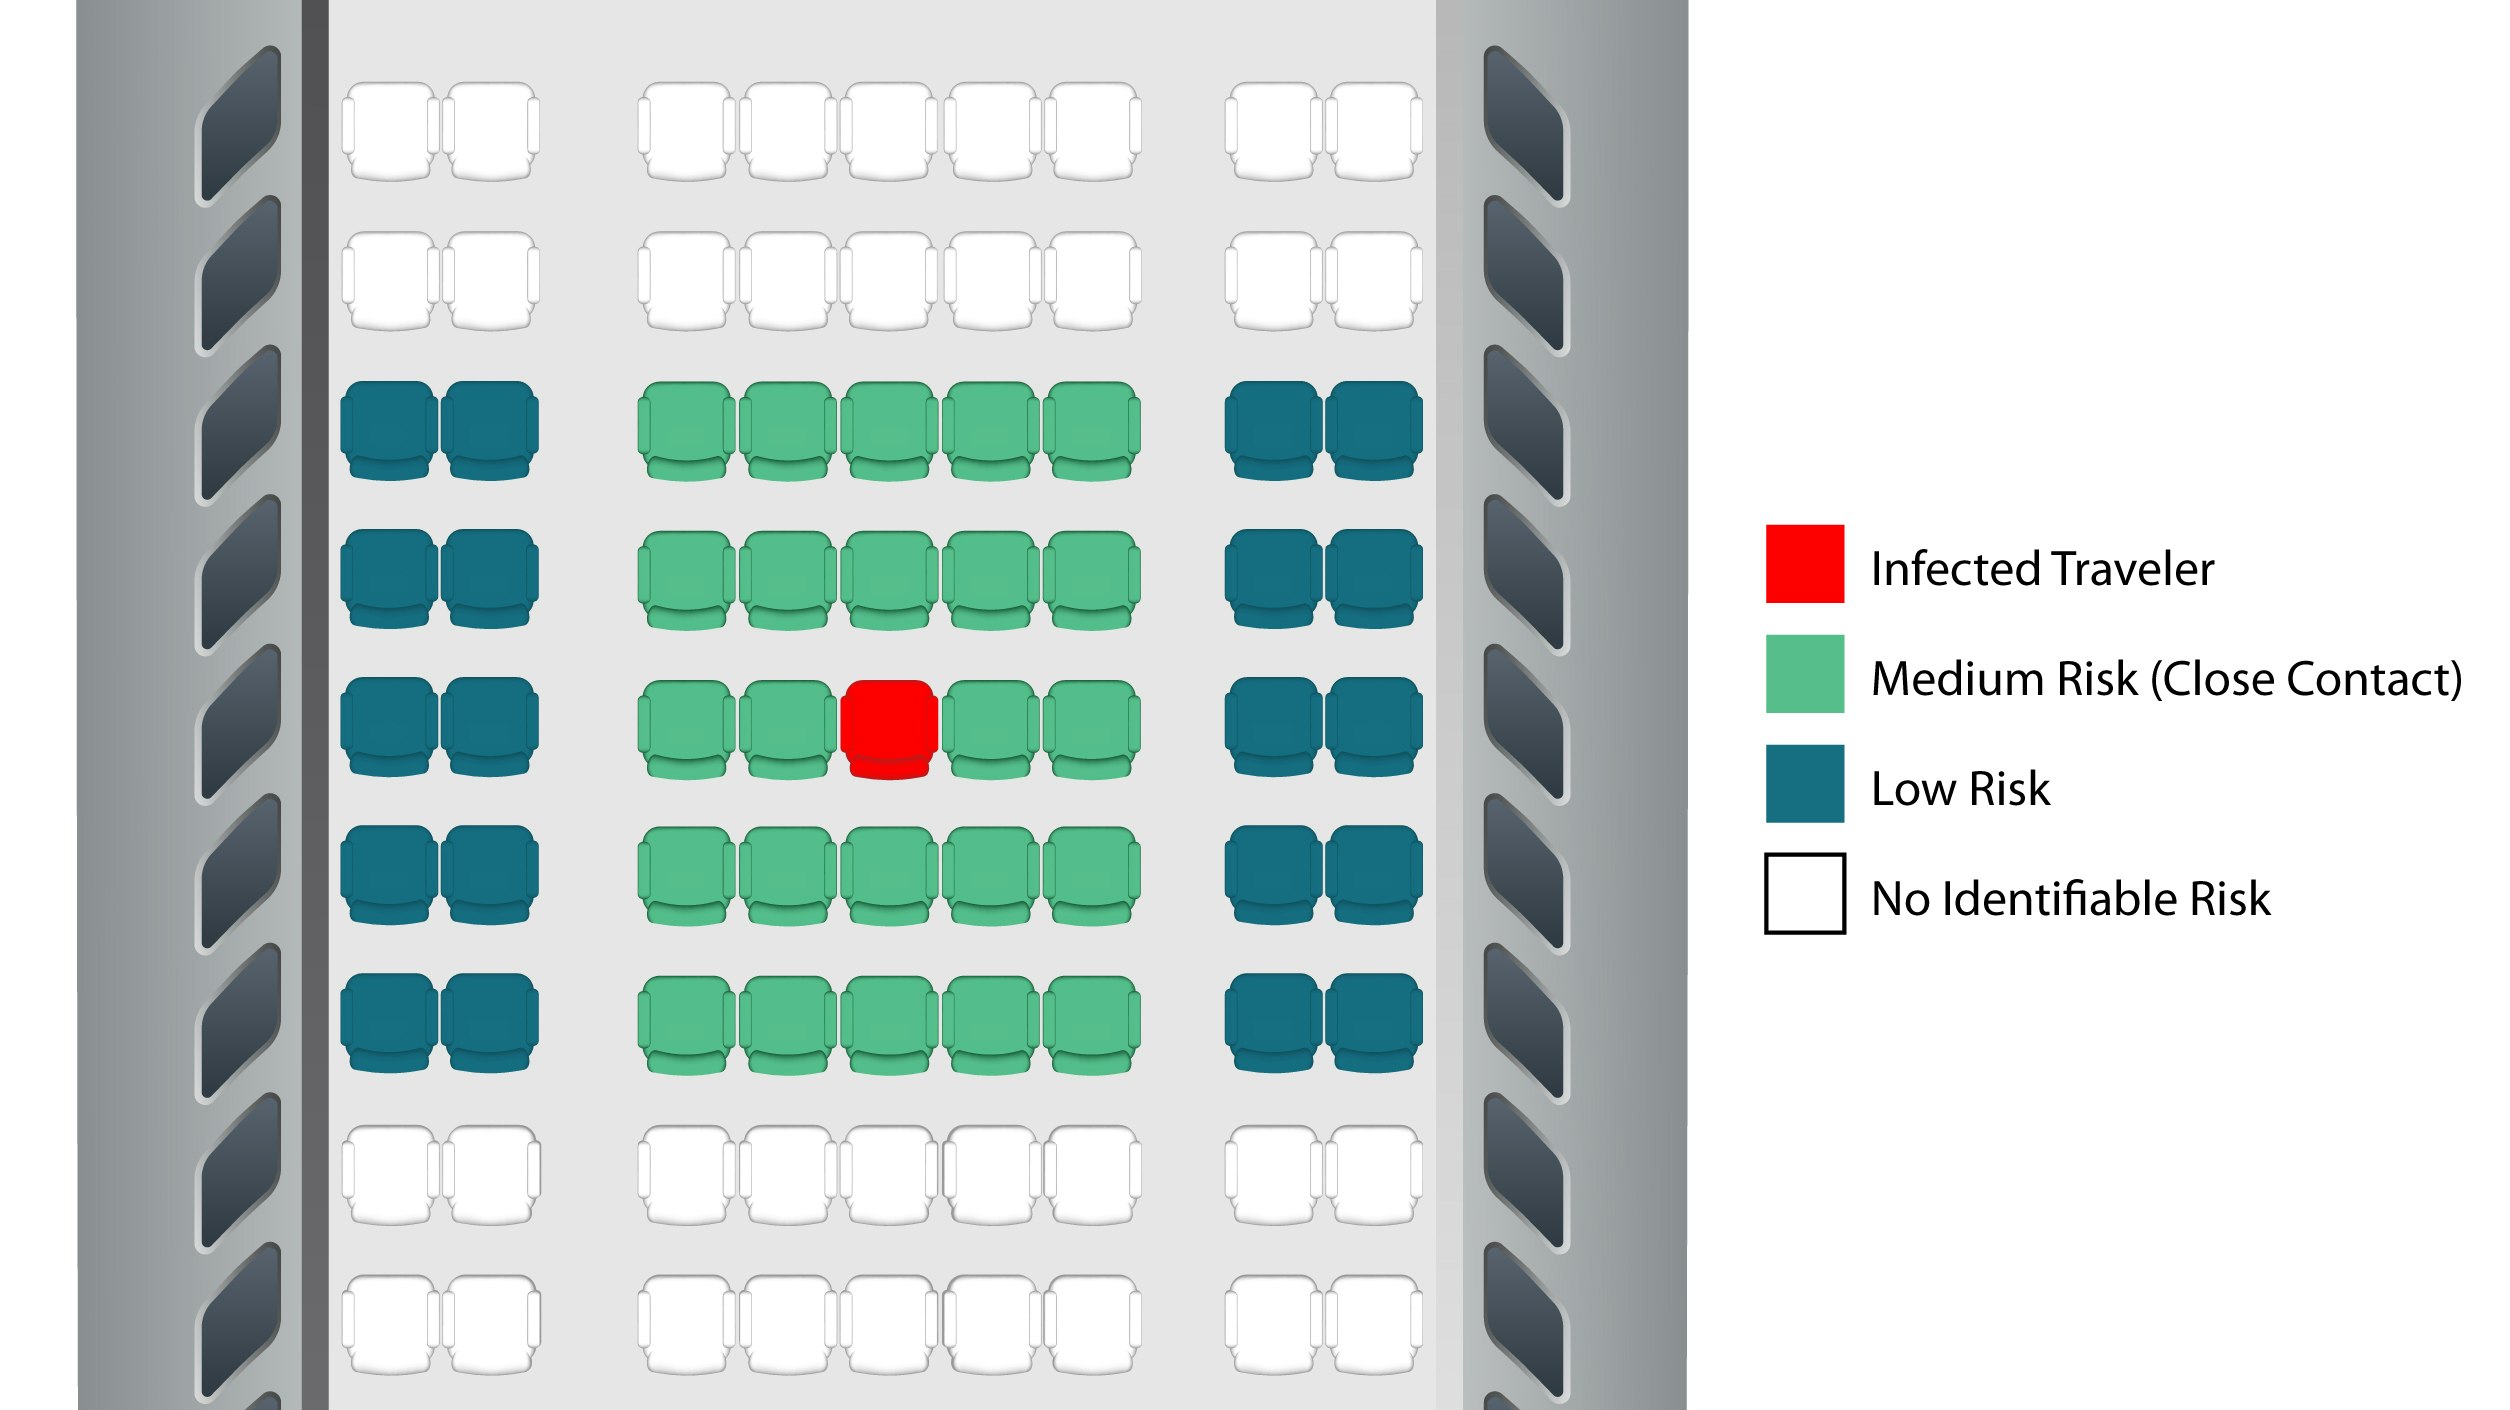 CDC plane seating diagram.jpg